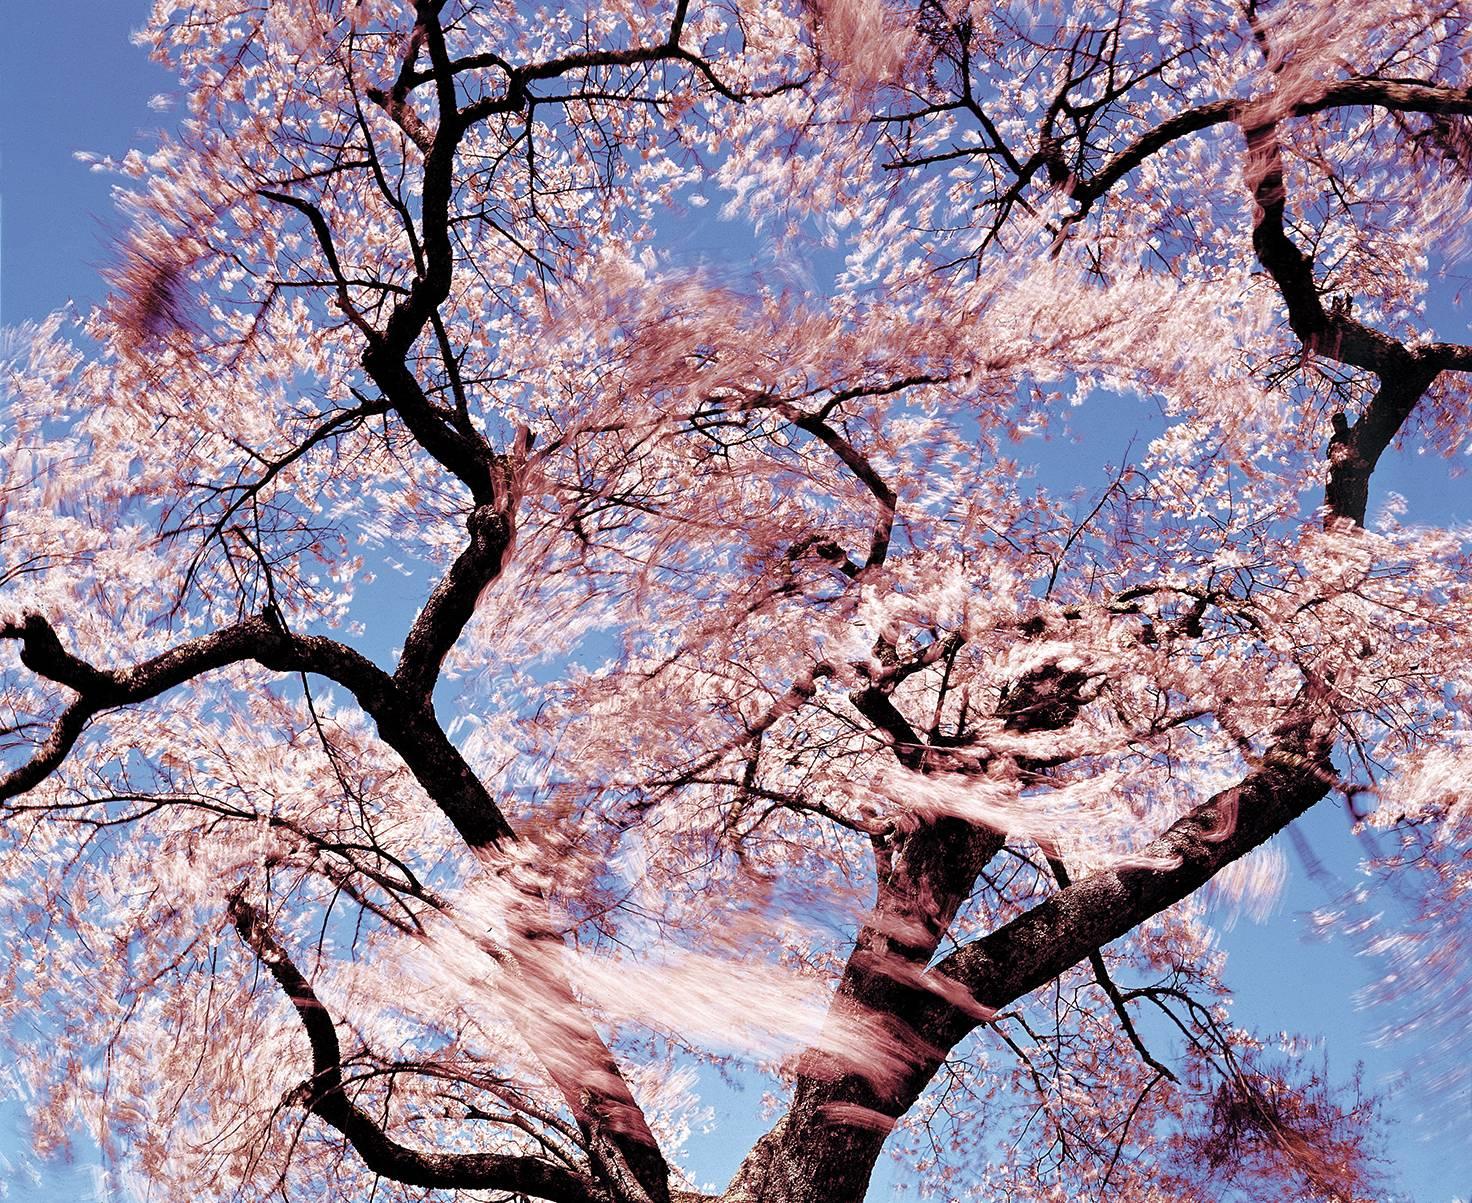 Yoshimitsu Nagasaka Landscape Photograph - Cherry Blossoms Blowing in the Wind